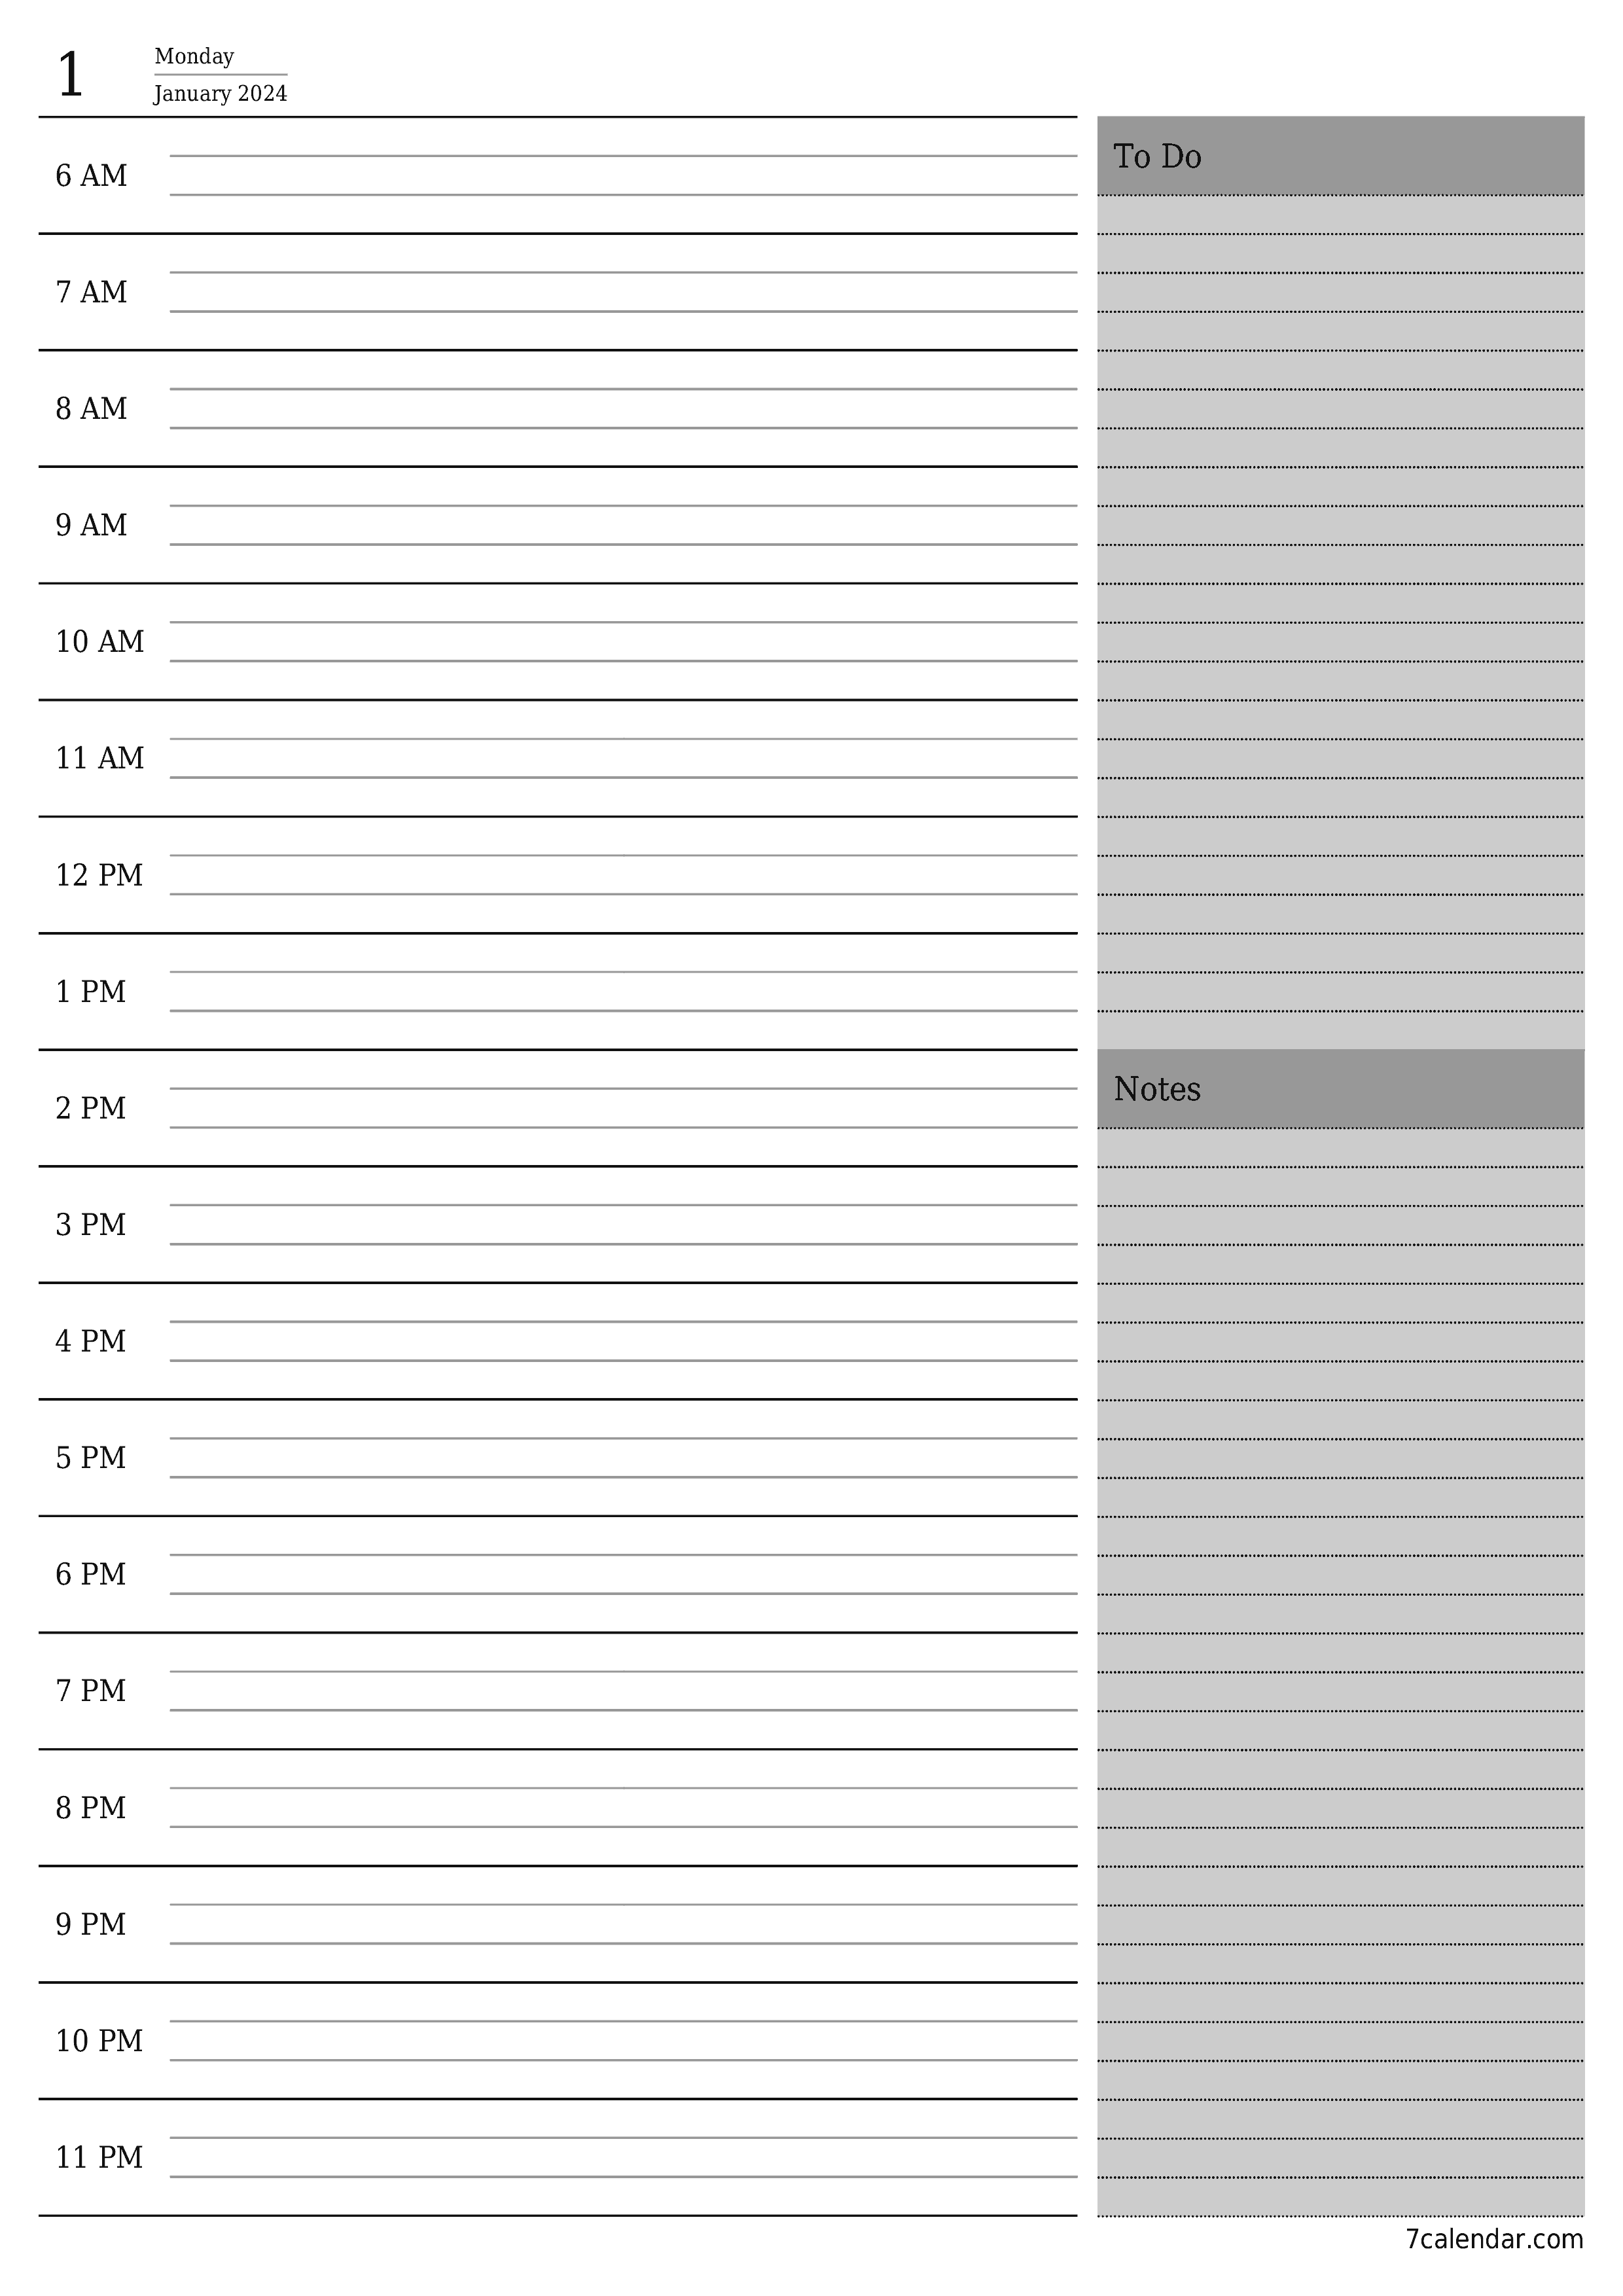 Blank calendar January 2024